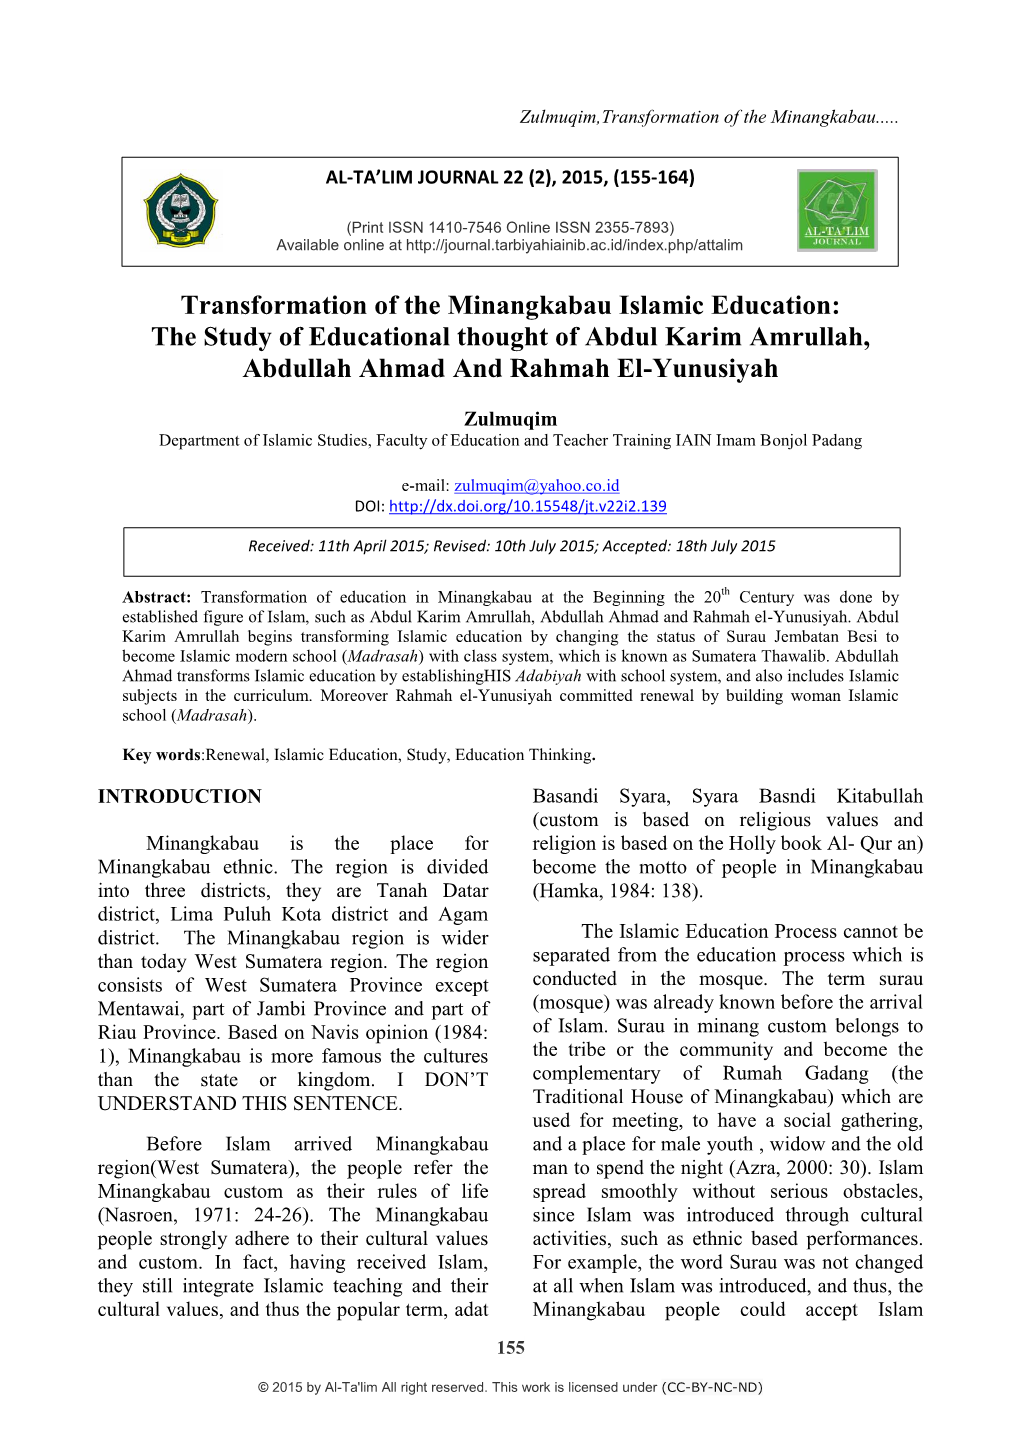 Transformation of the Minangkabau Islamic Education: the Study of Educational Thought of Abdul Karim Amrullah, Abdullah Ahmad and Rahmah El-Yunusiyah